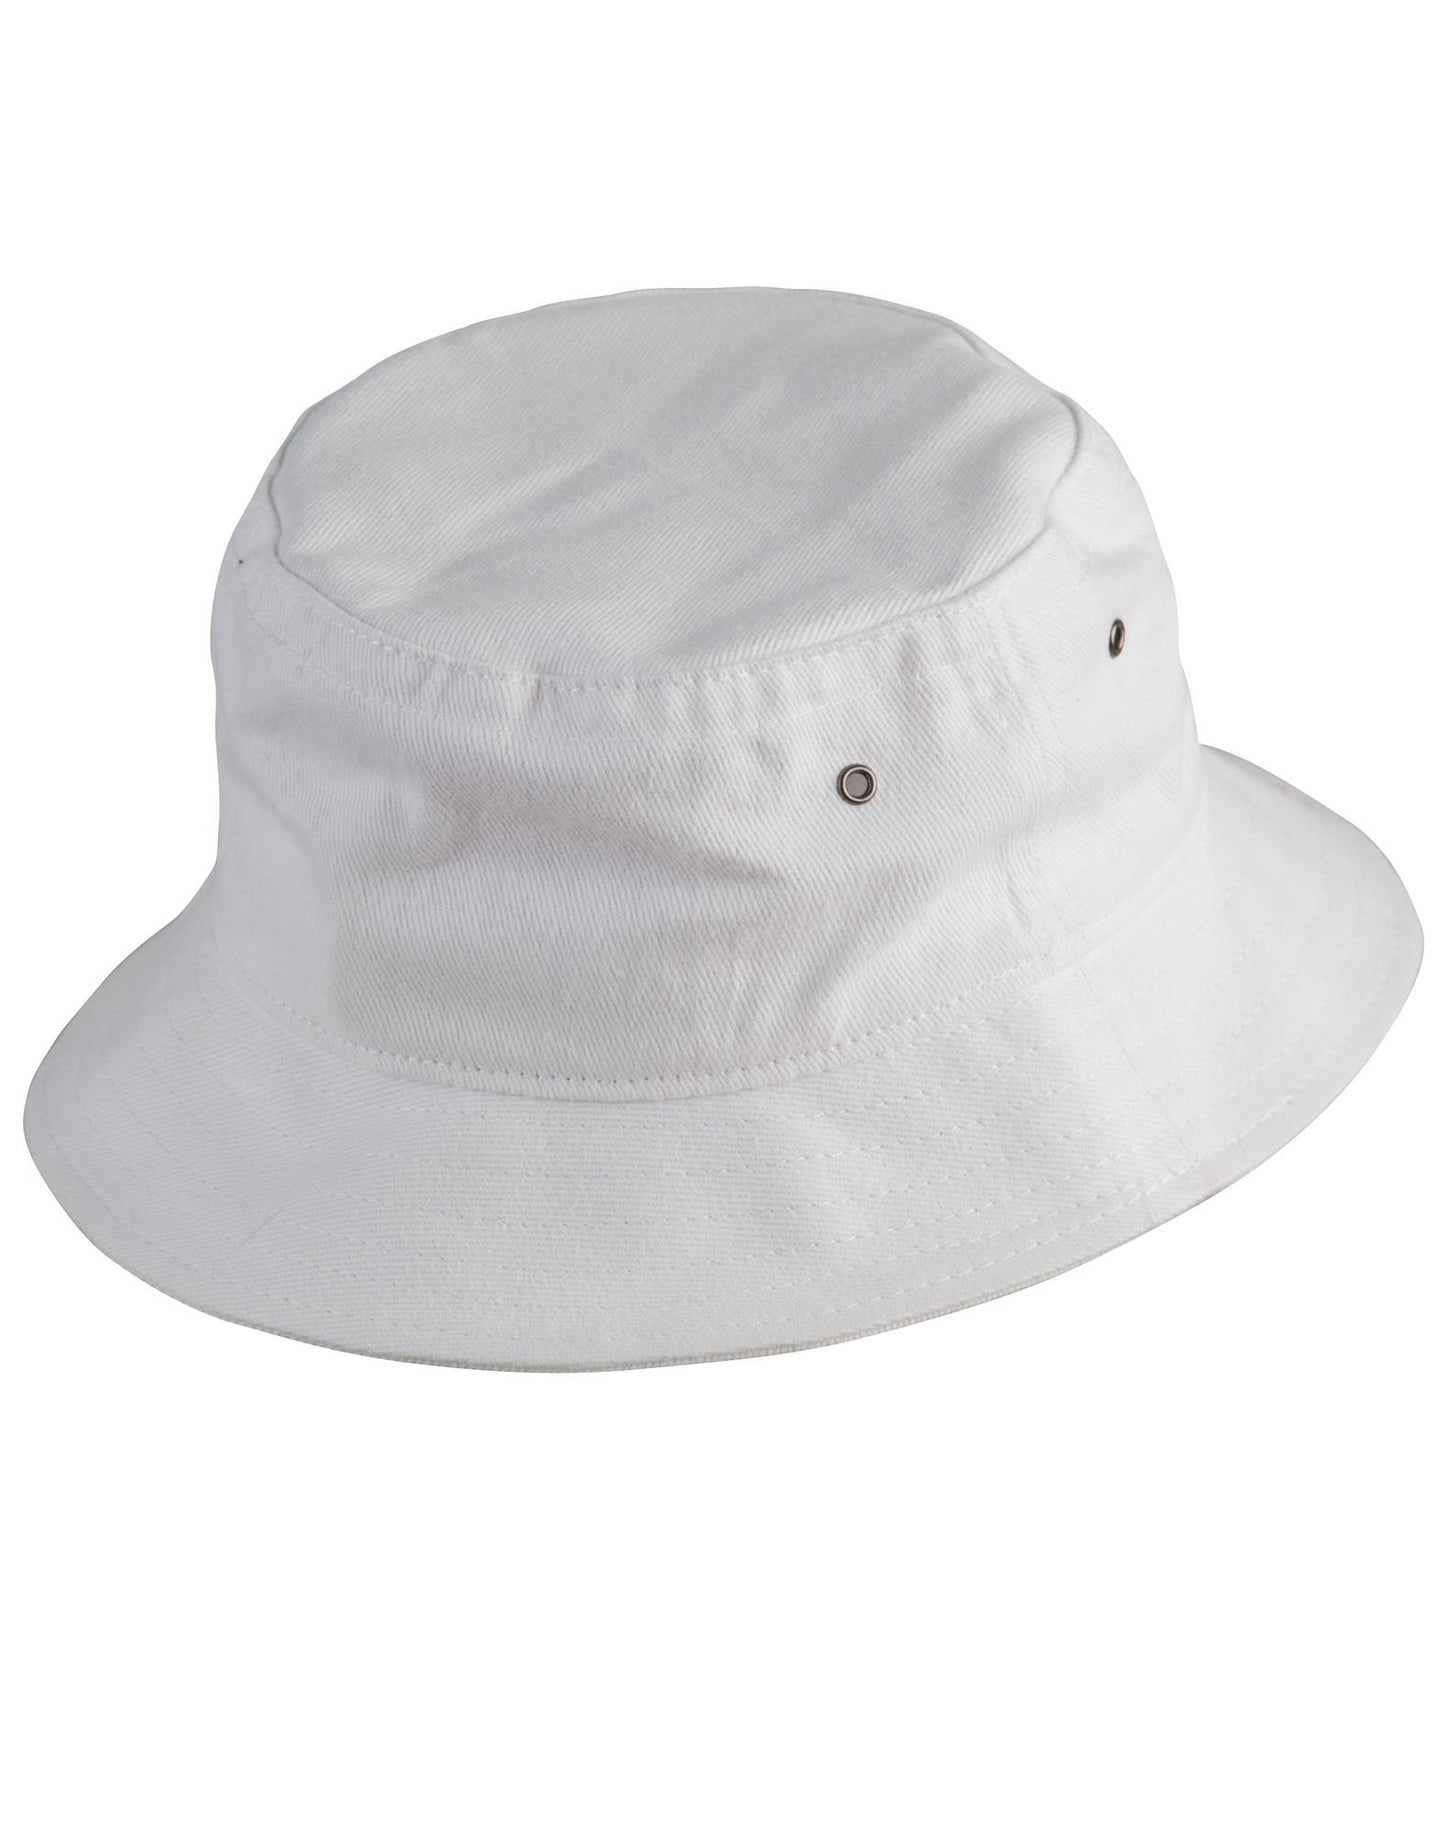 CH29 Soft Washed Bucket Hat - Star Uniforms Australia